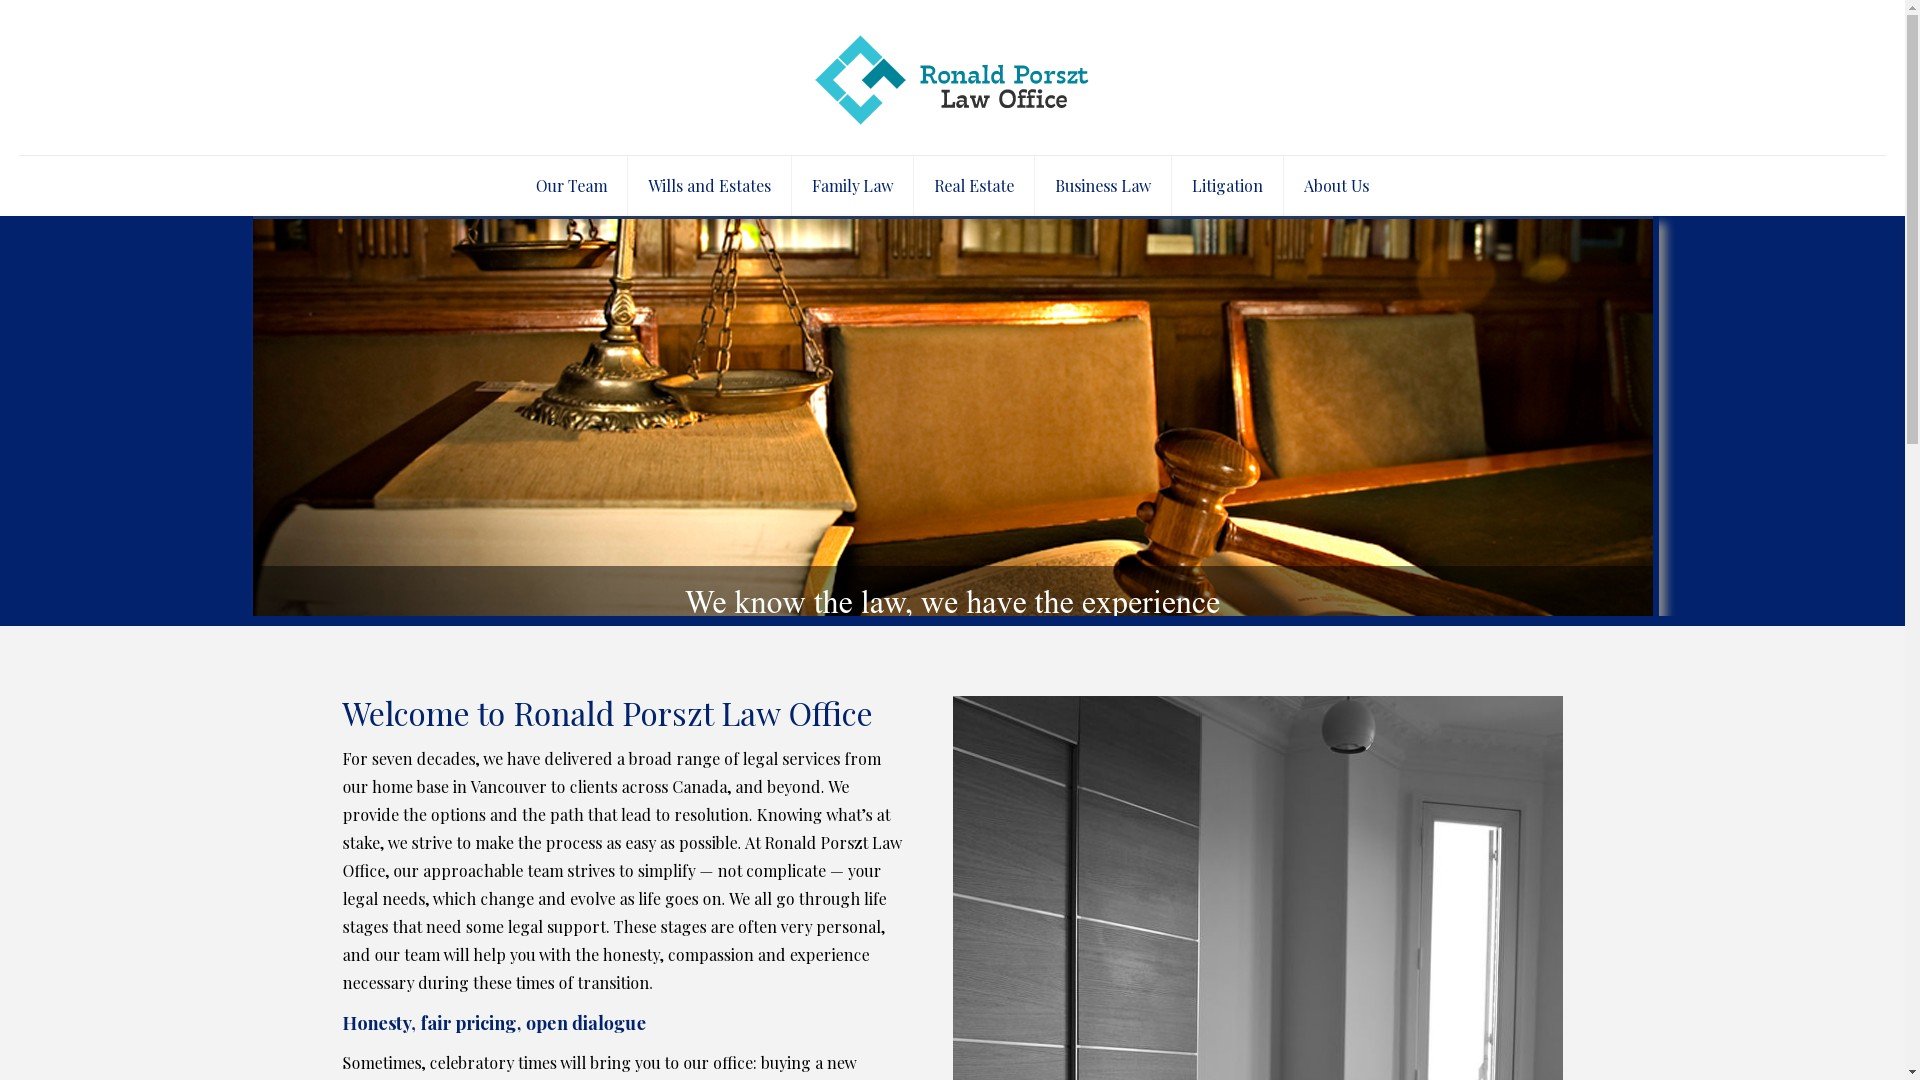 Ronald Porszt Law Office at ronaldporsztlaw.com